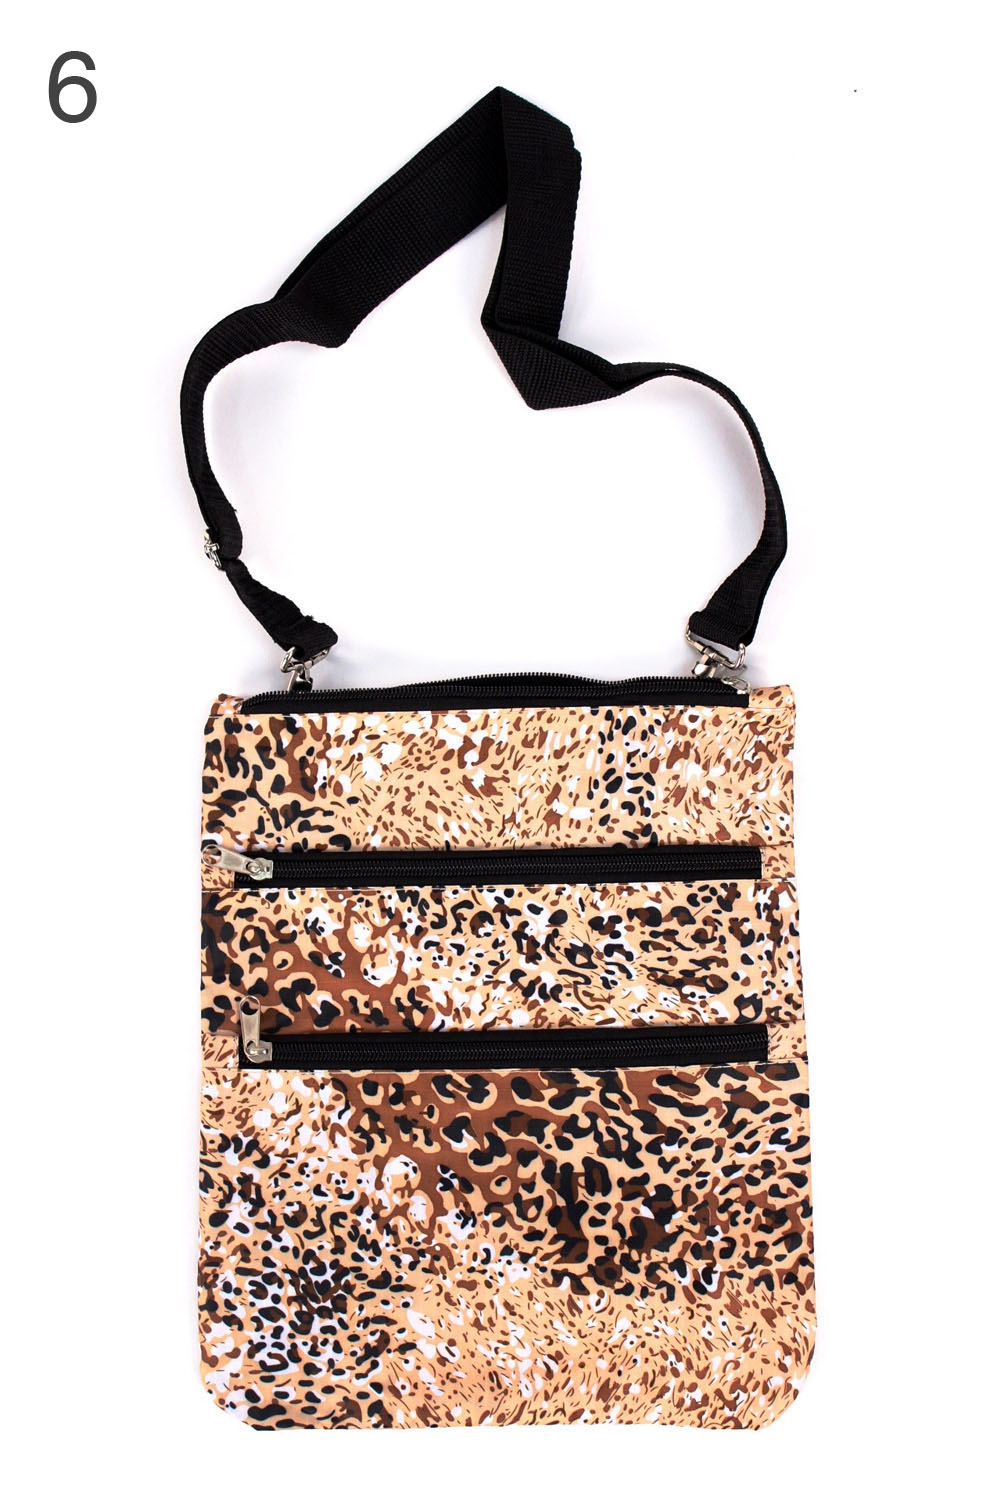 Messenger Bag Satchel All Over Print Pattern Fashion Shoulder Purse Cross Body | eBay